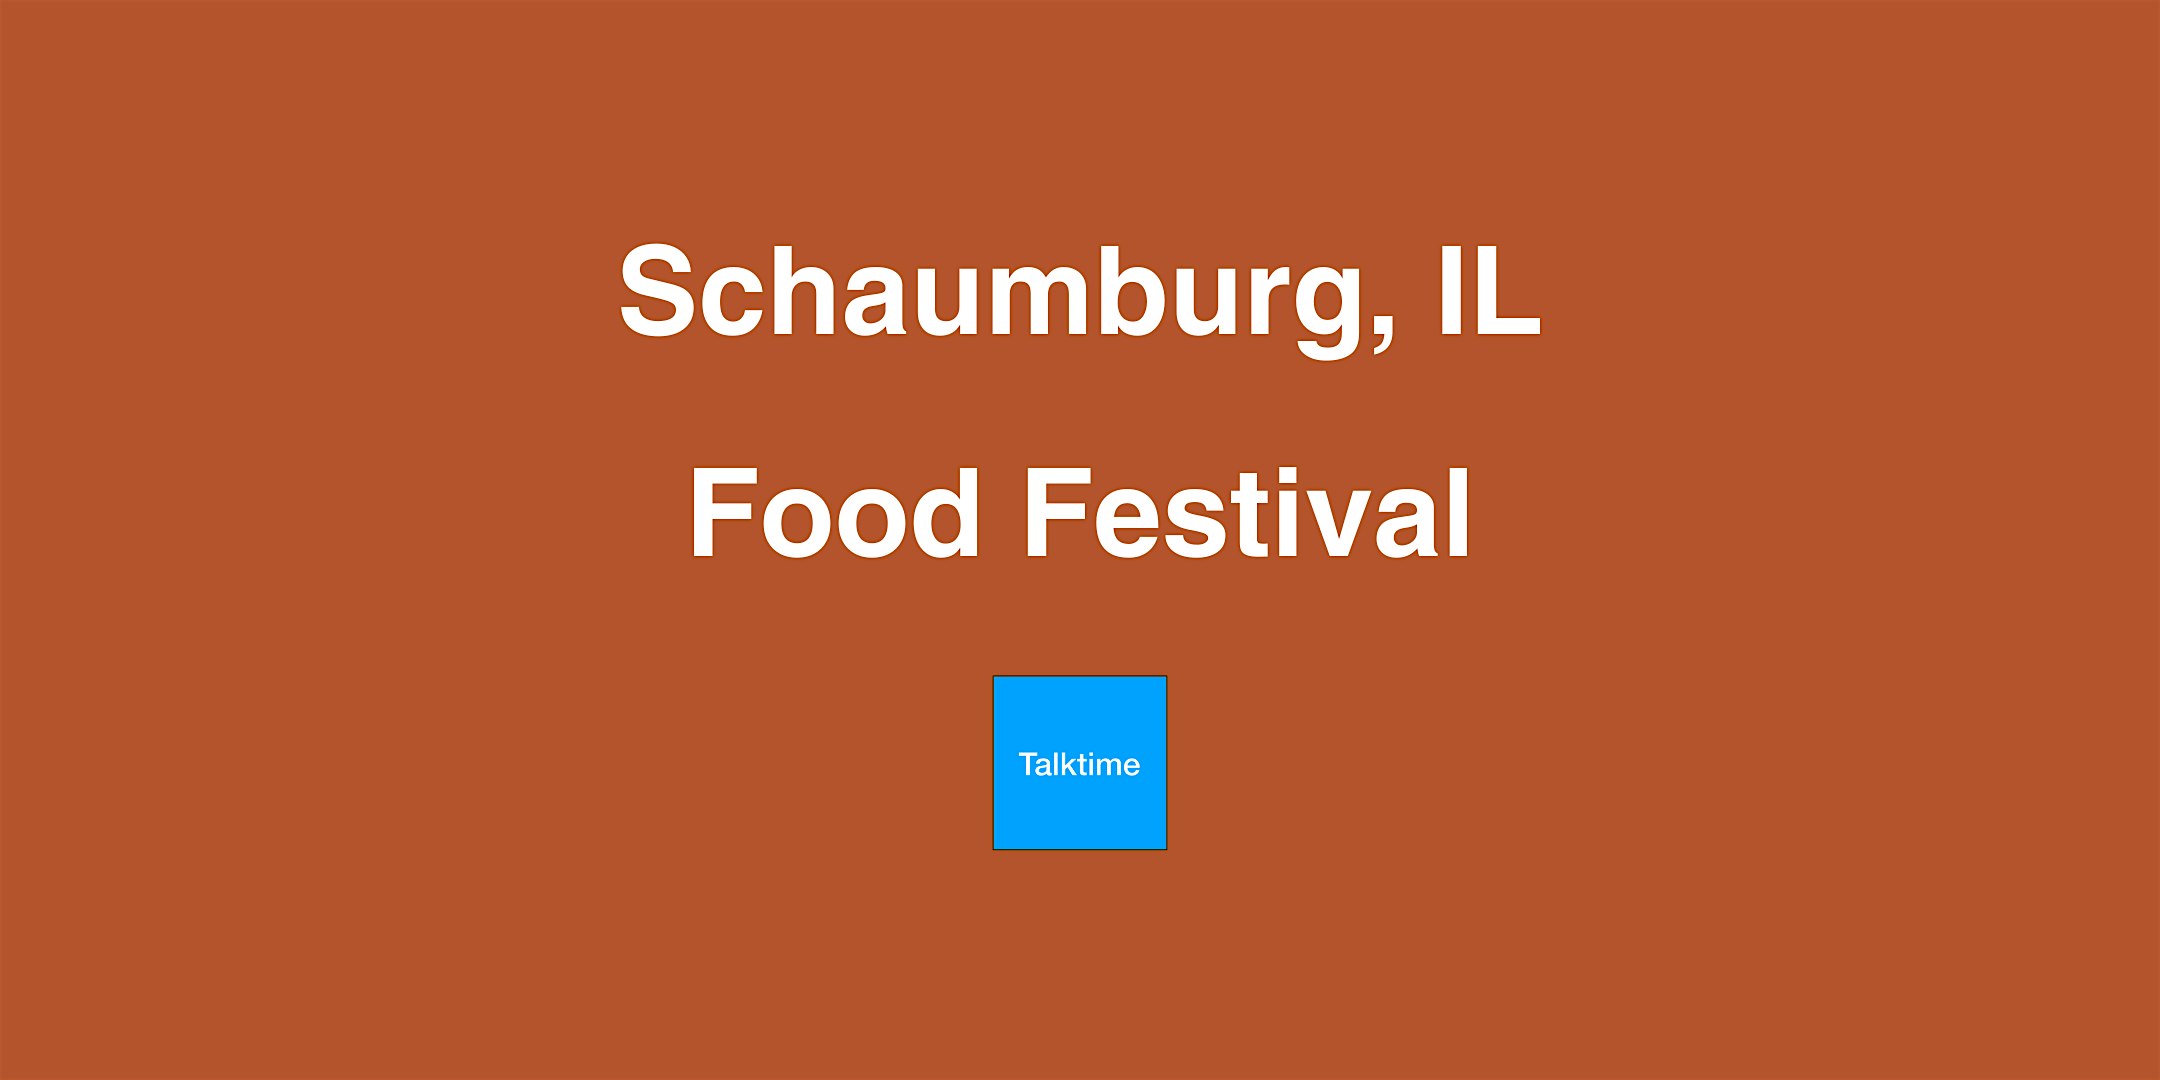 Food Festival - Schaumburg